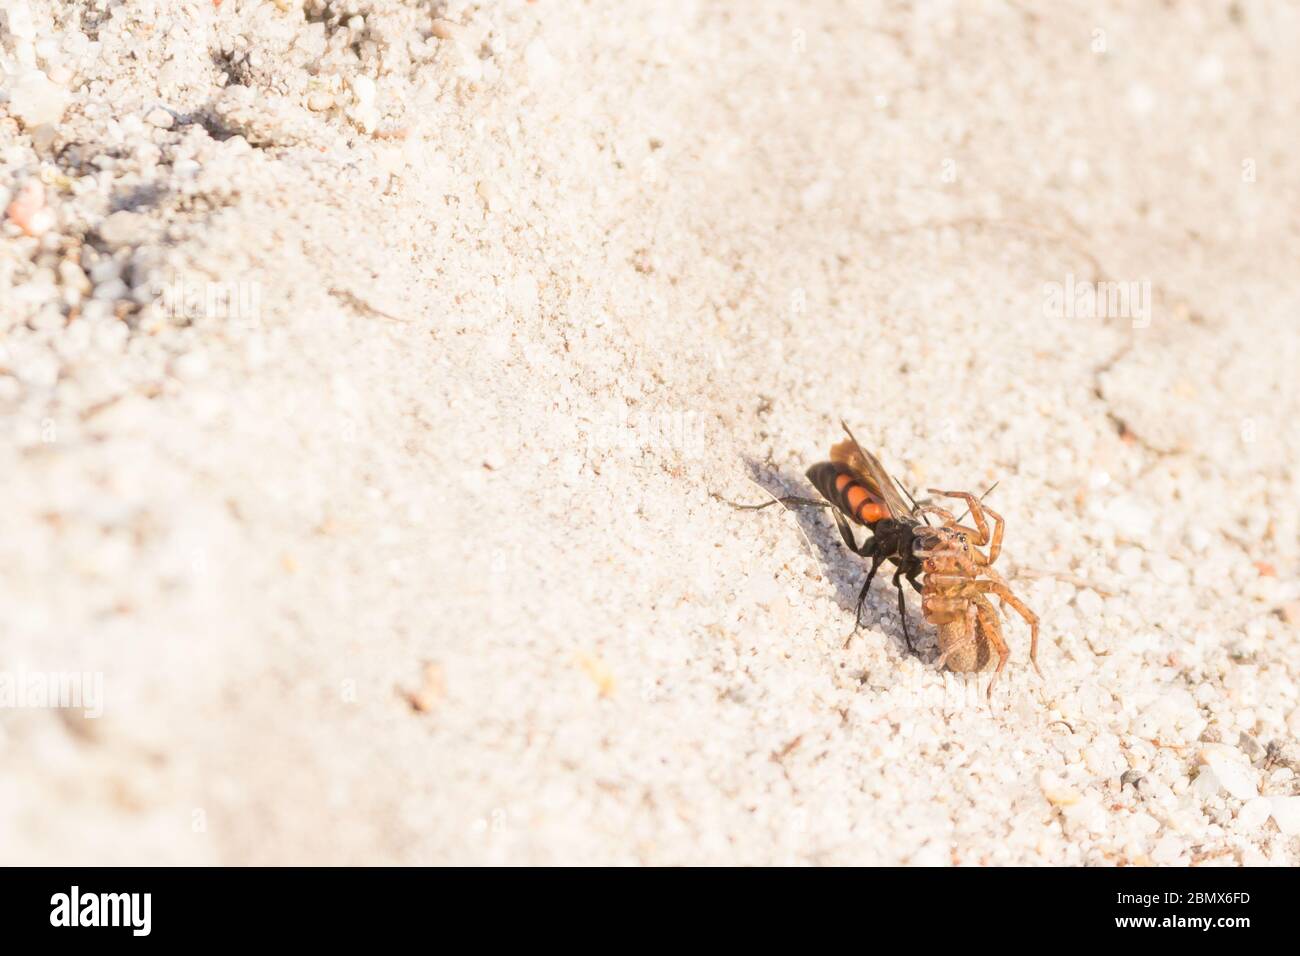 Spider hunting wasp (Anoplius viaticus?) with paralysed prey on heathland. Dorset, UK. Stock Photo